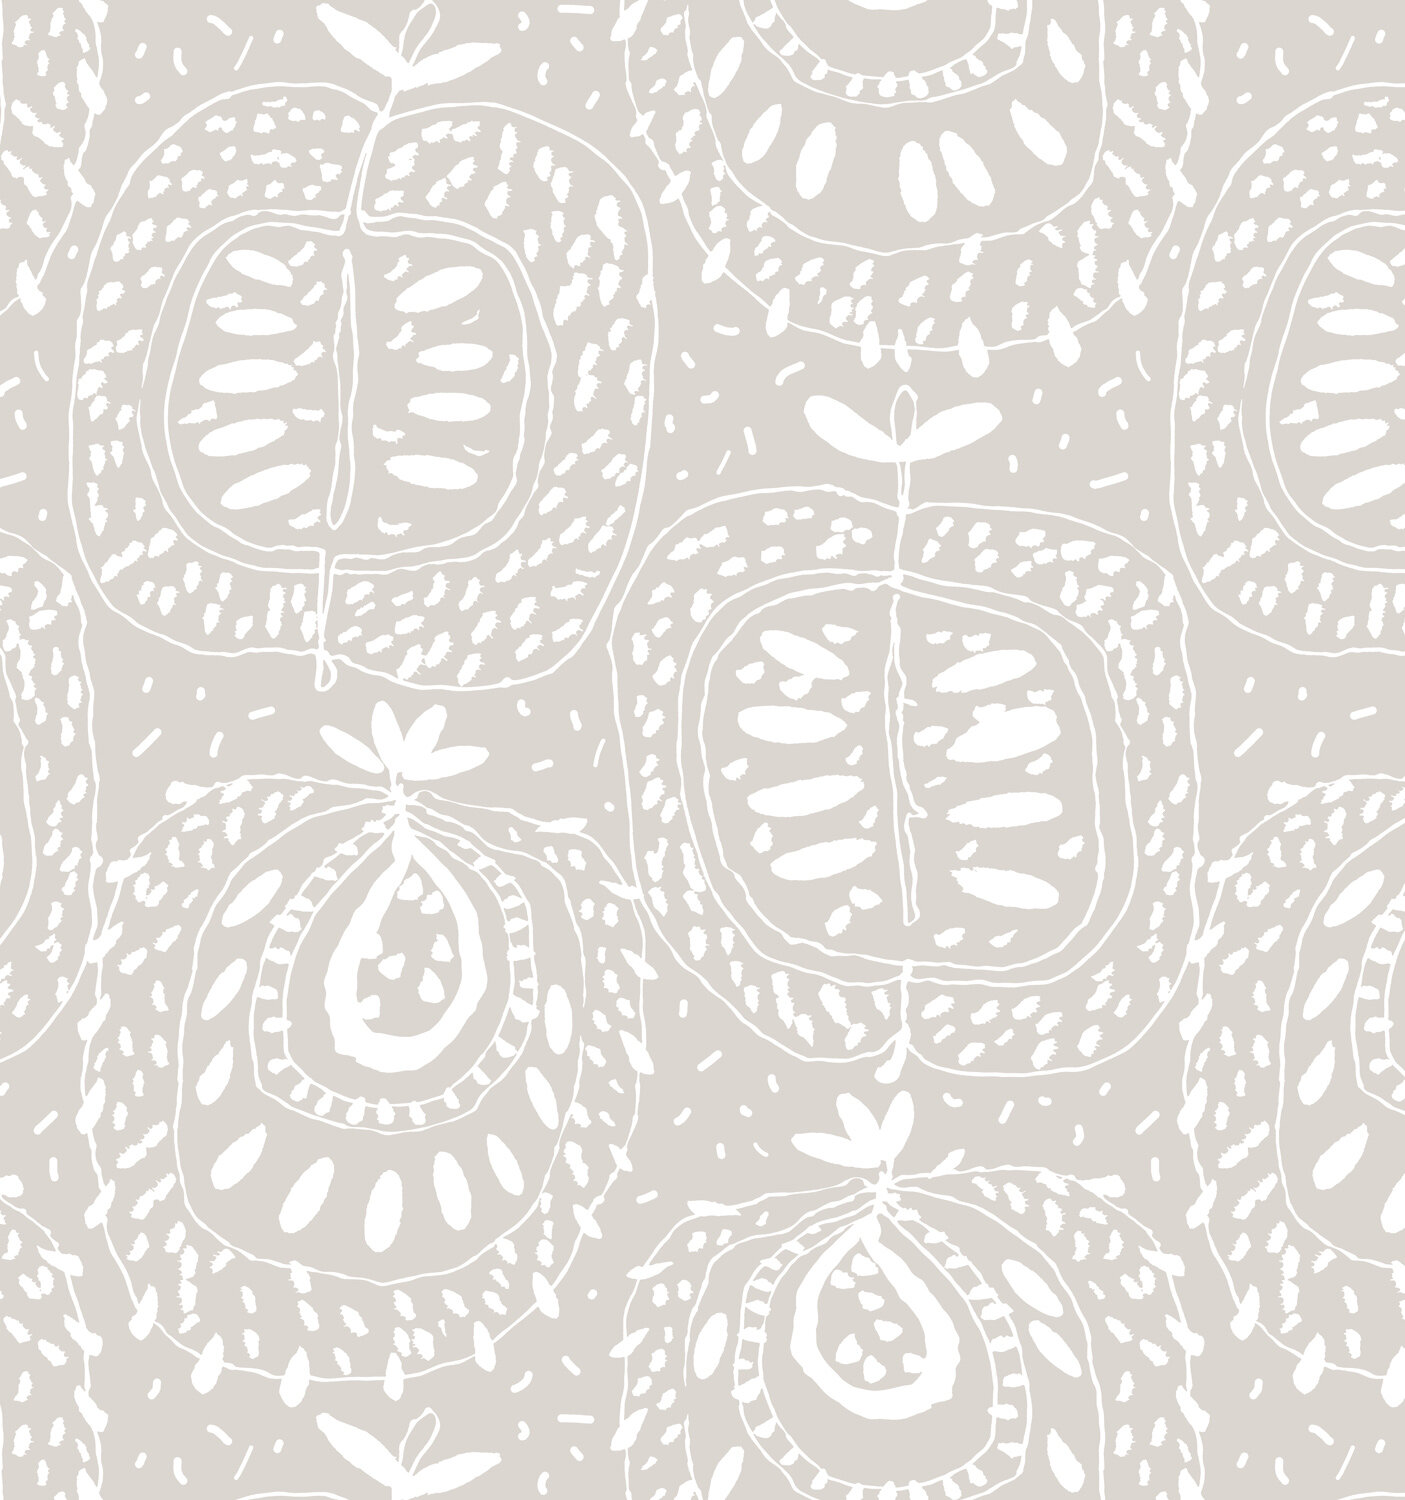  Pattern design “ADAM AND EVE” by Iiro A. Ahokas / image: Iiro A. Ahokas 